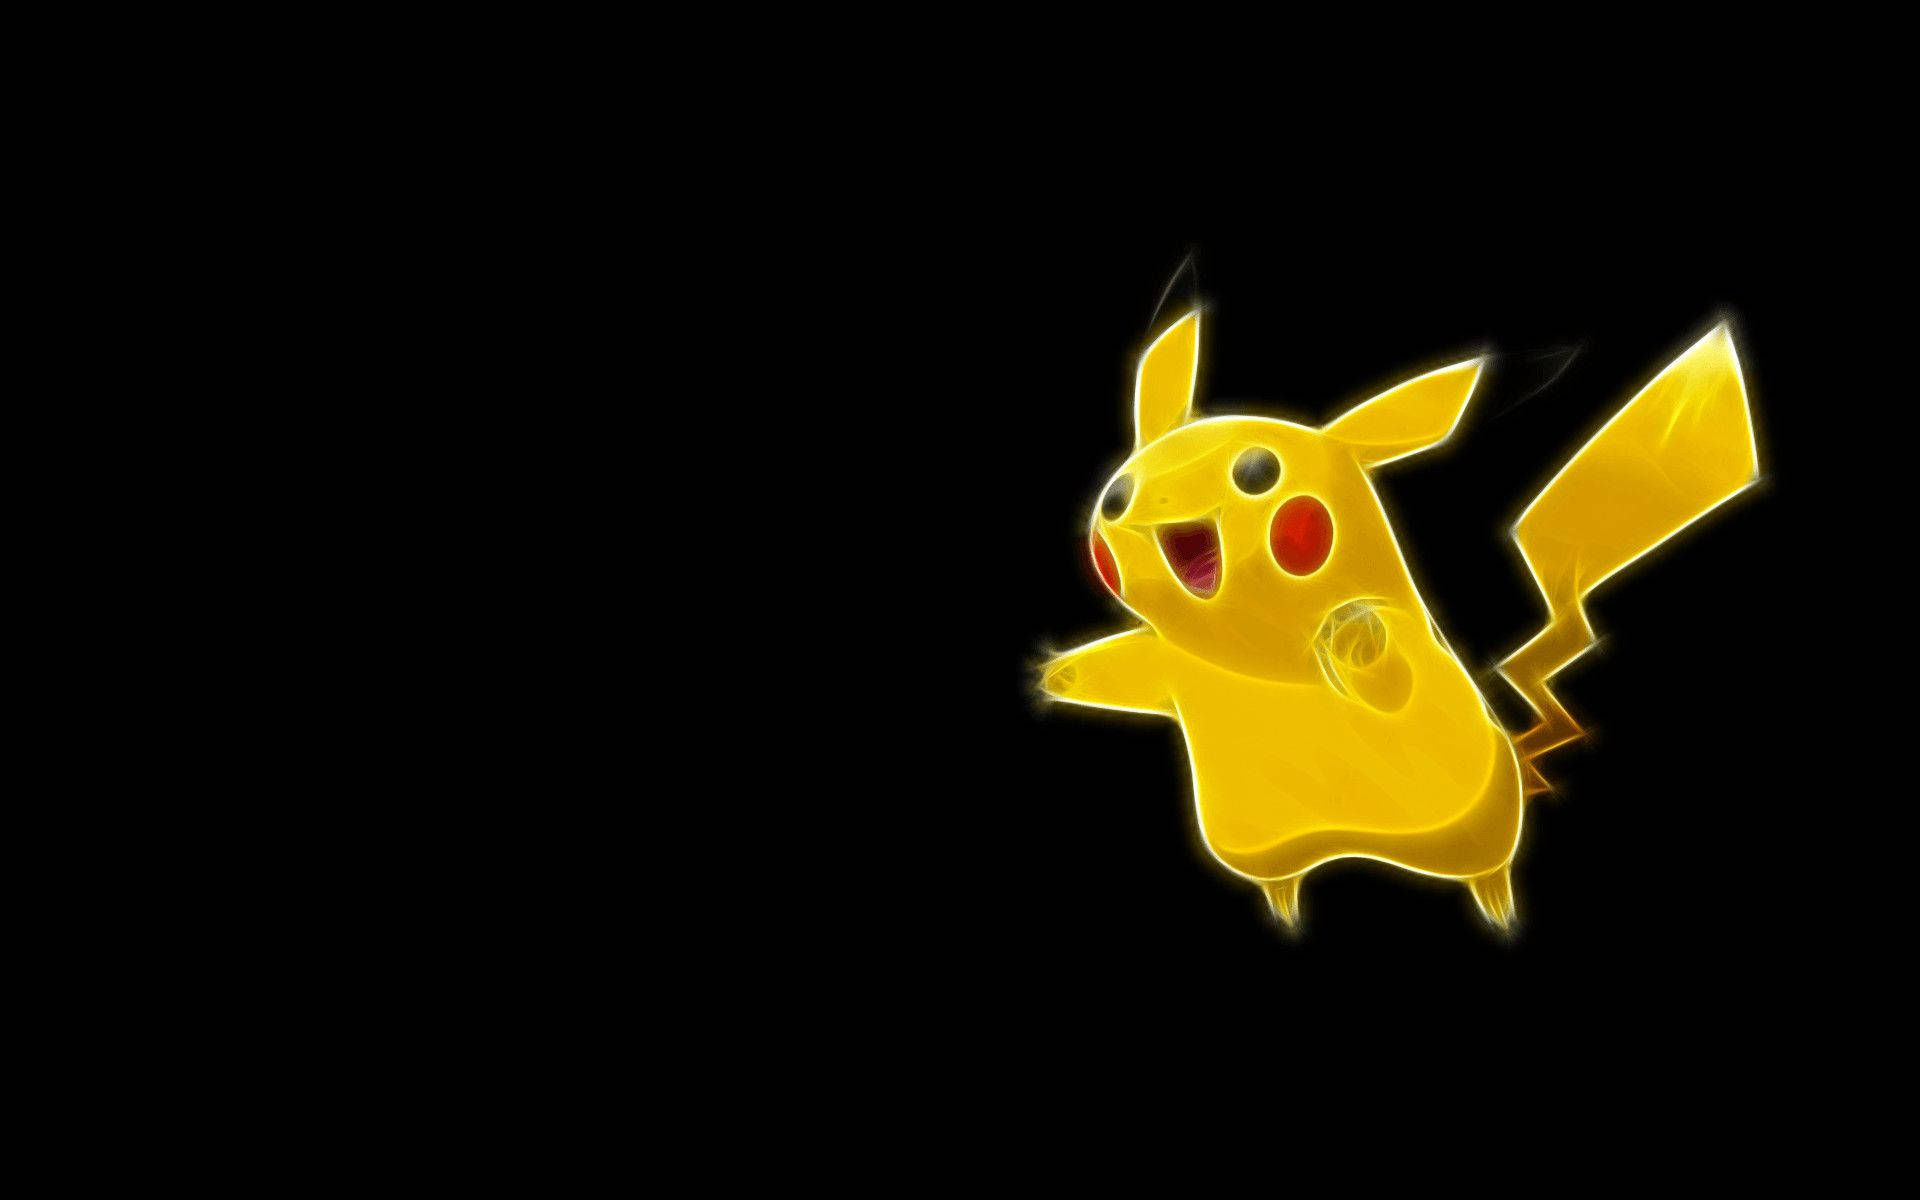 Yellow Pokémon Pikachu 3d Background